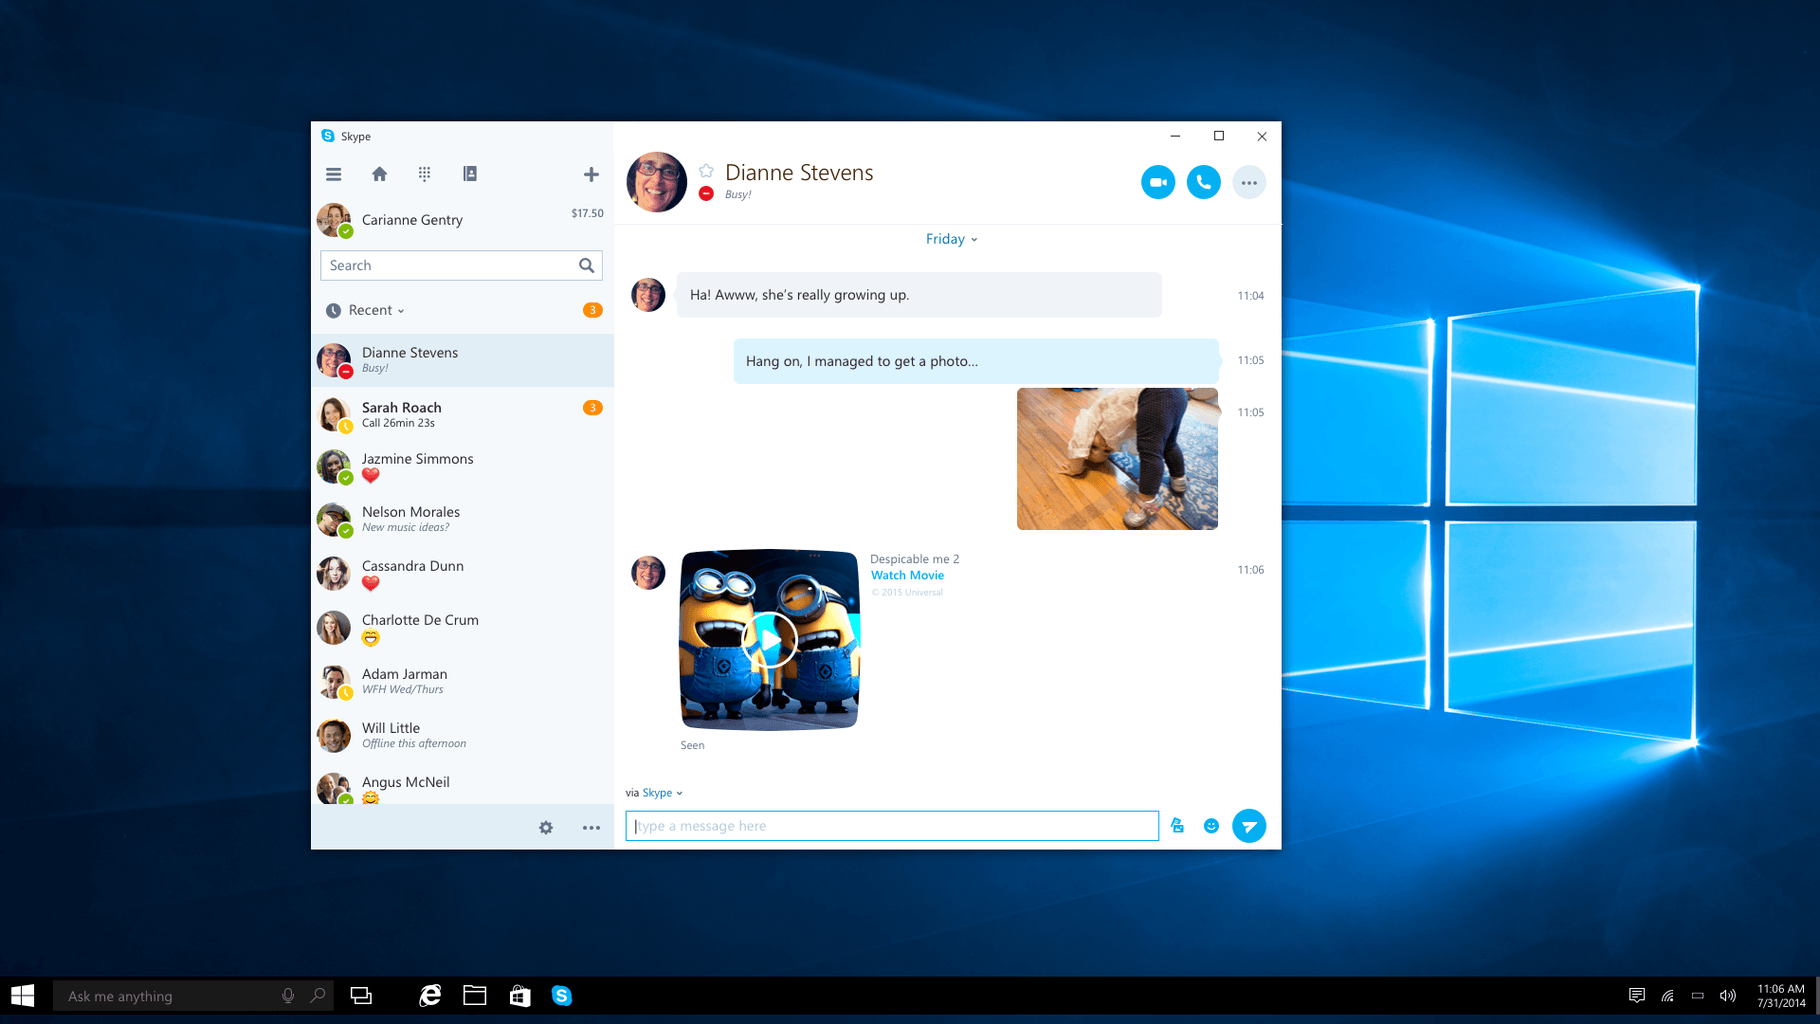 Skype 8.98.0.407 for windows instal